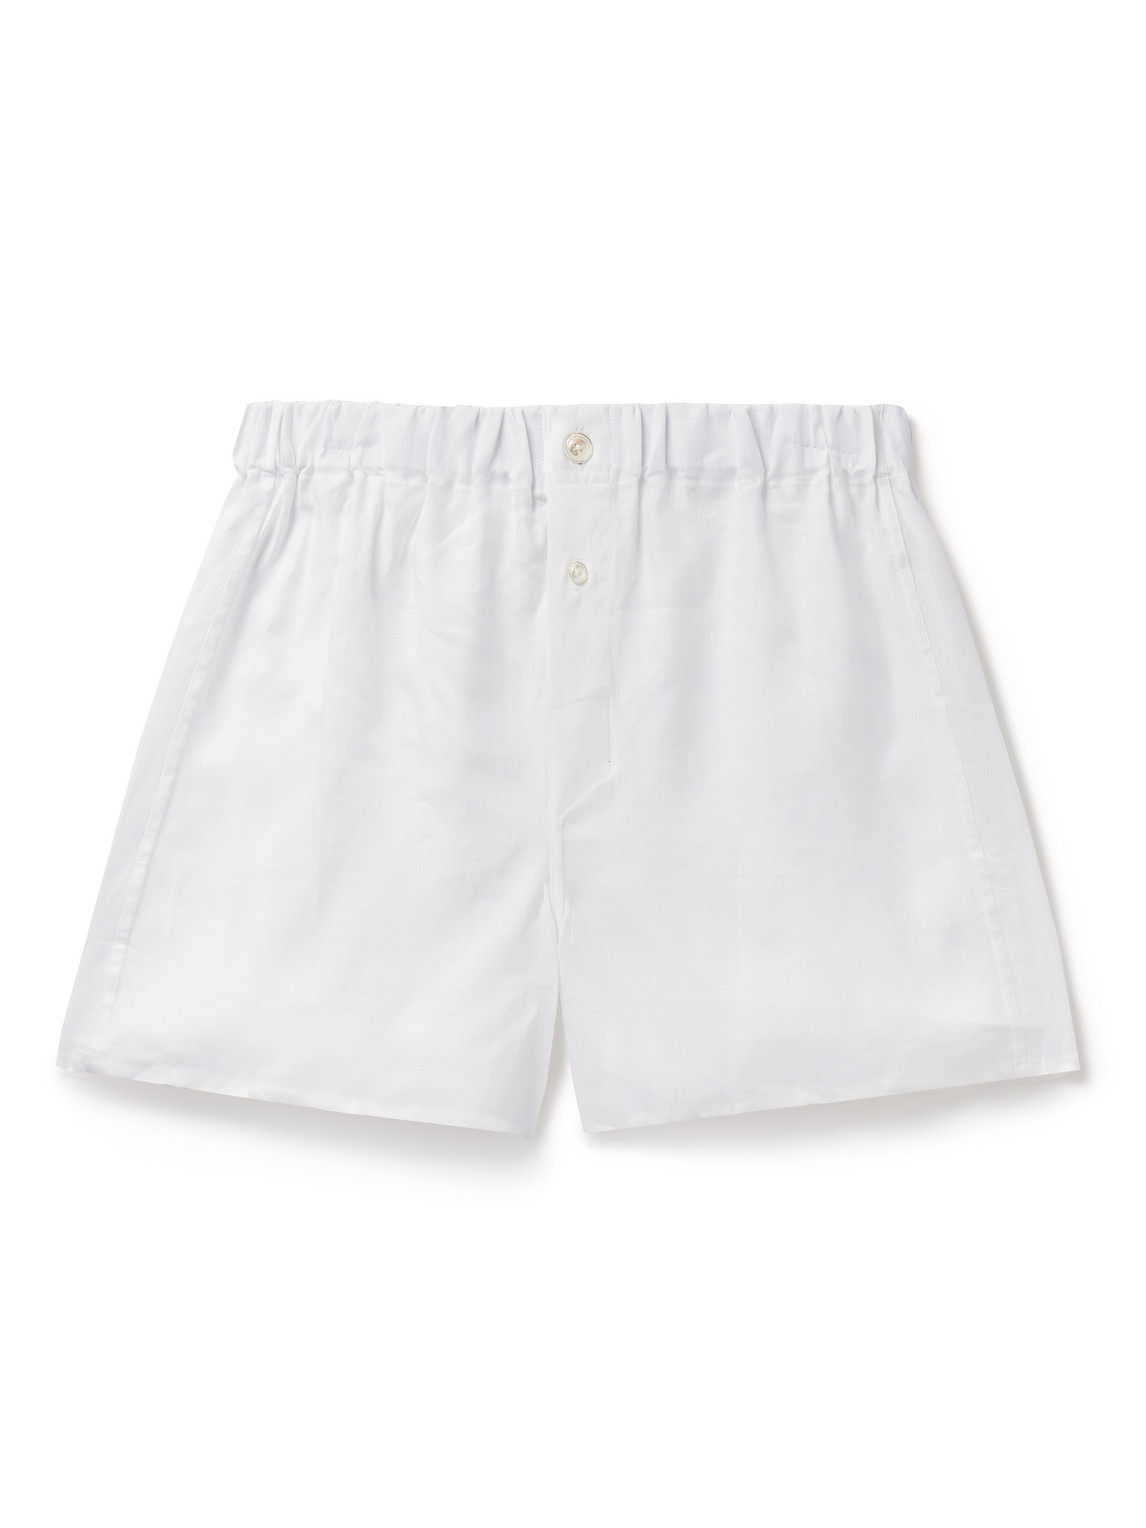 Emma Willis Linen Boxer Shorts In White